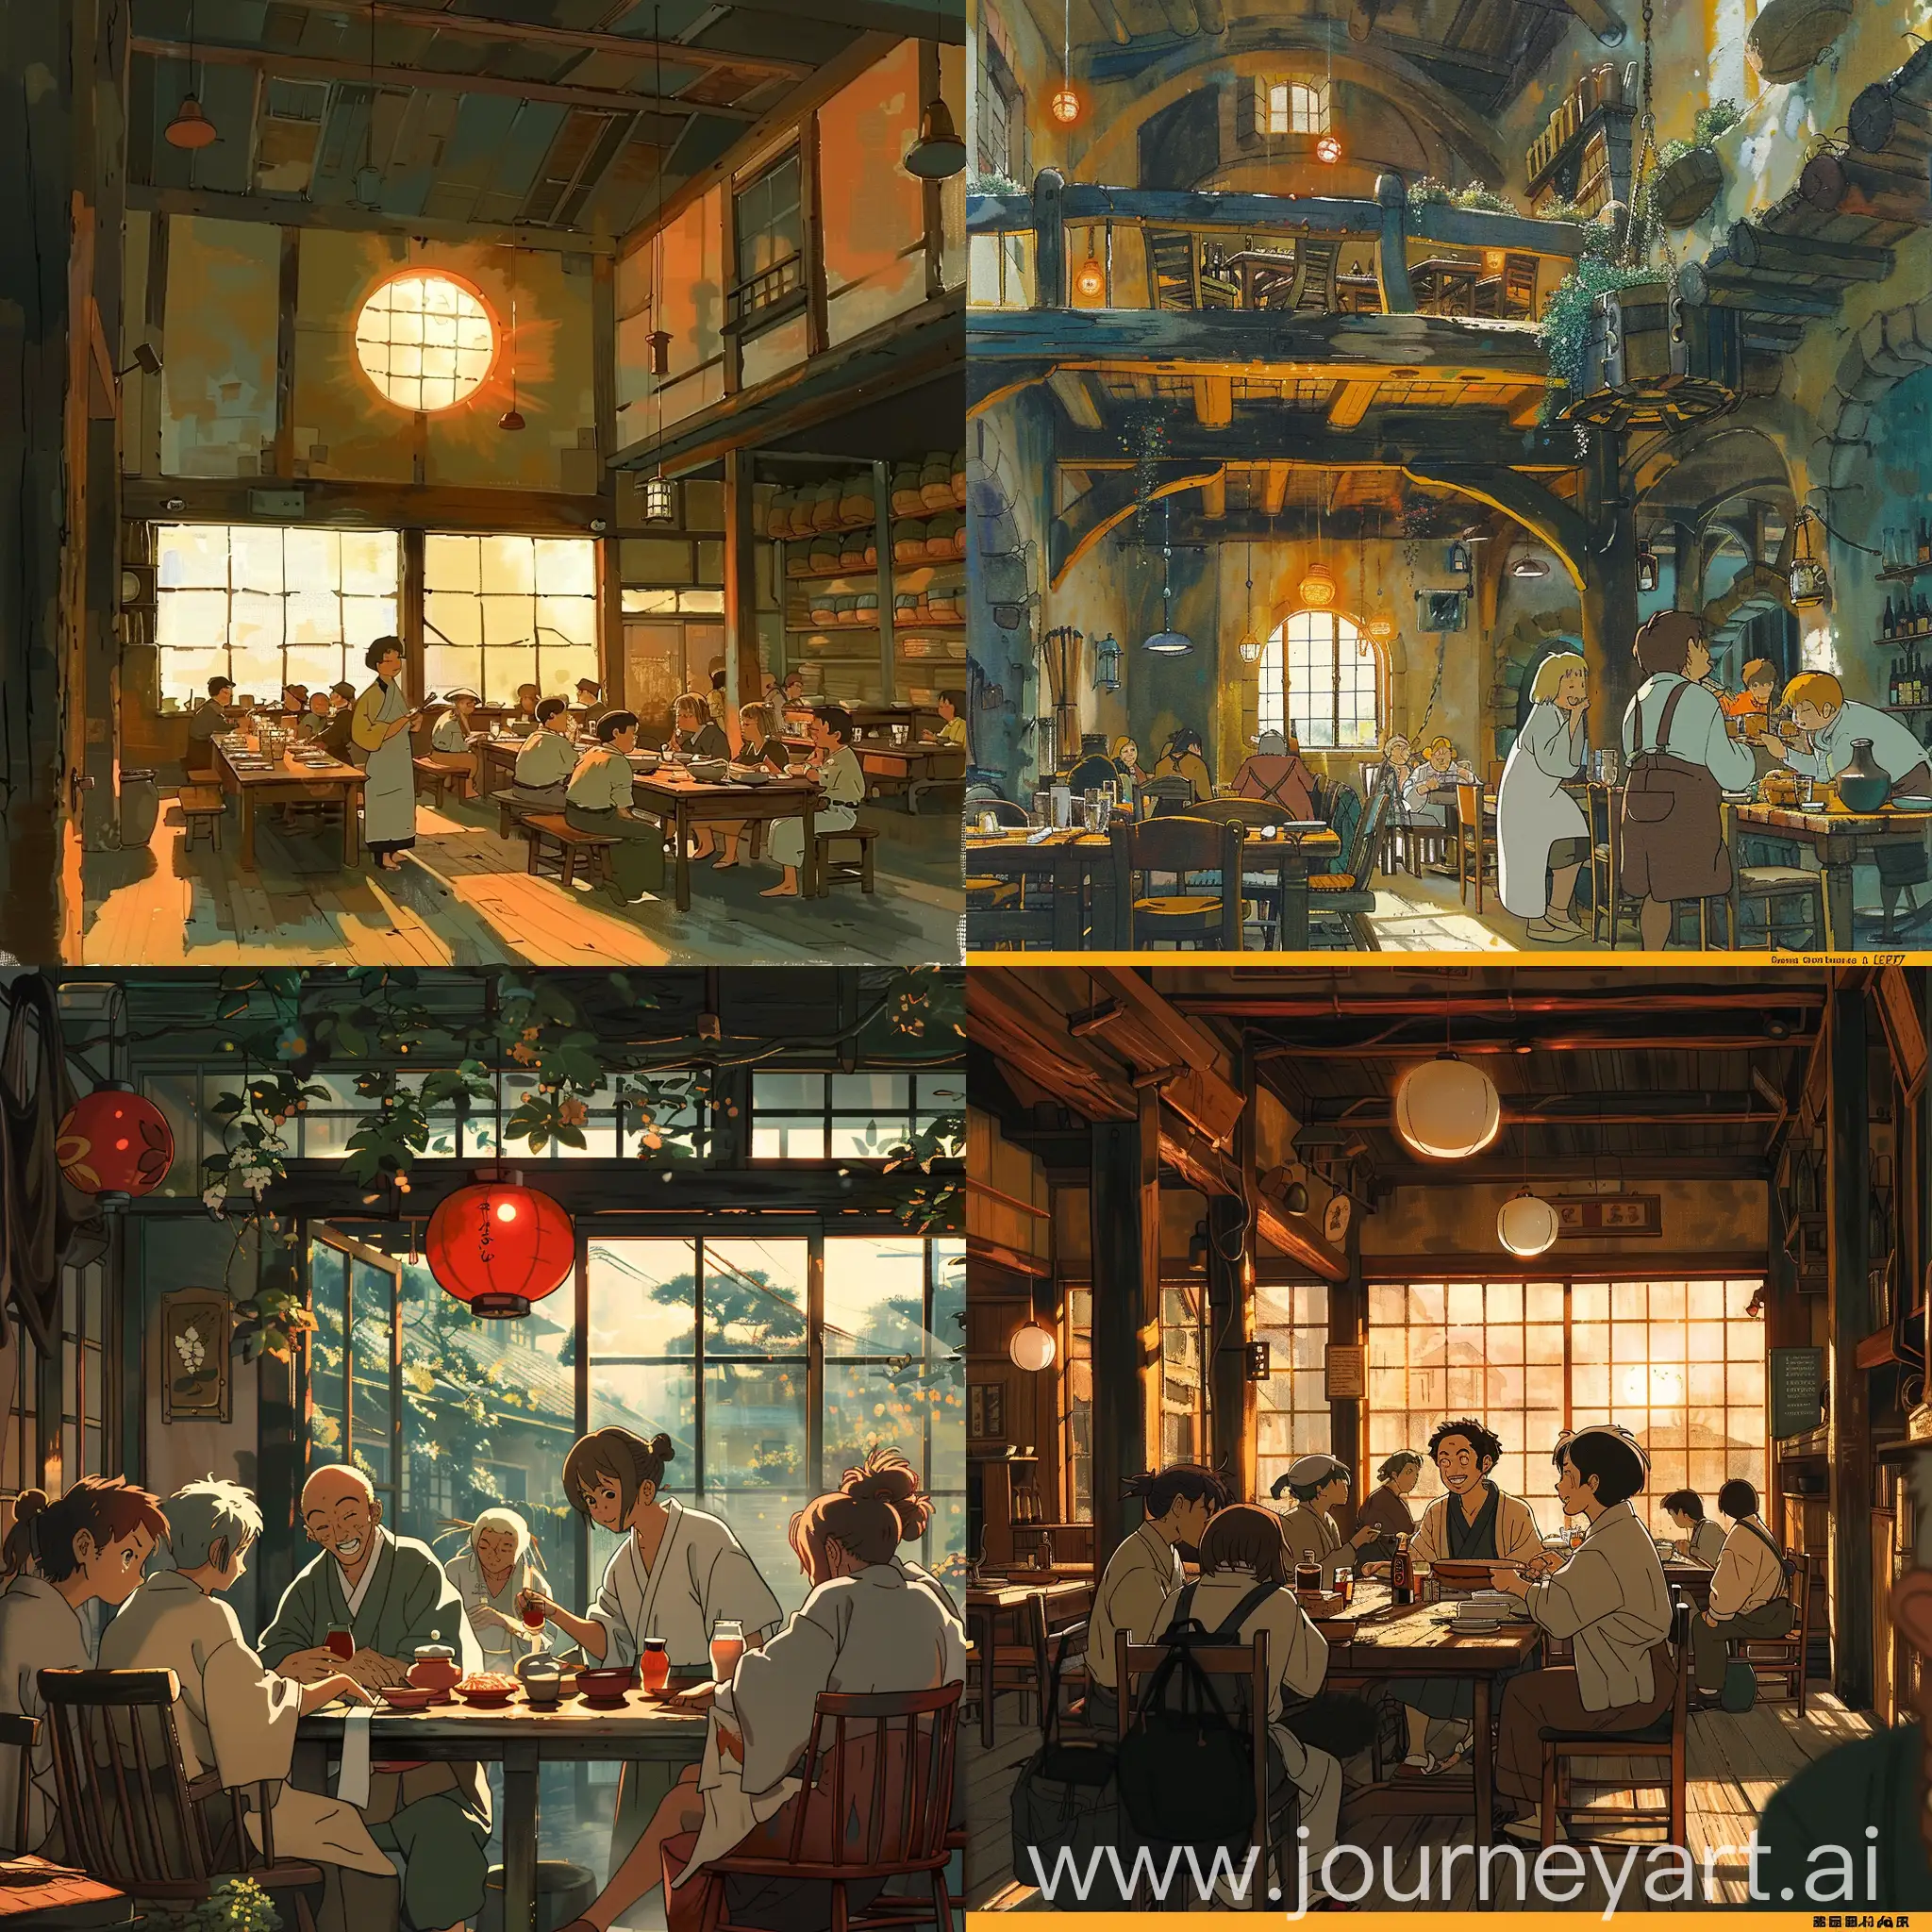 Cheerful-Folk-Enjoying-GhibliInspired-Sunshine-at-1557-Restaurant